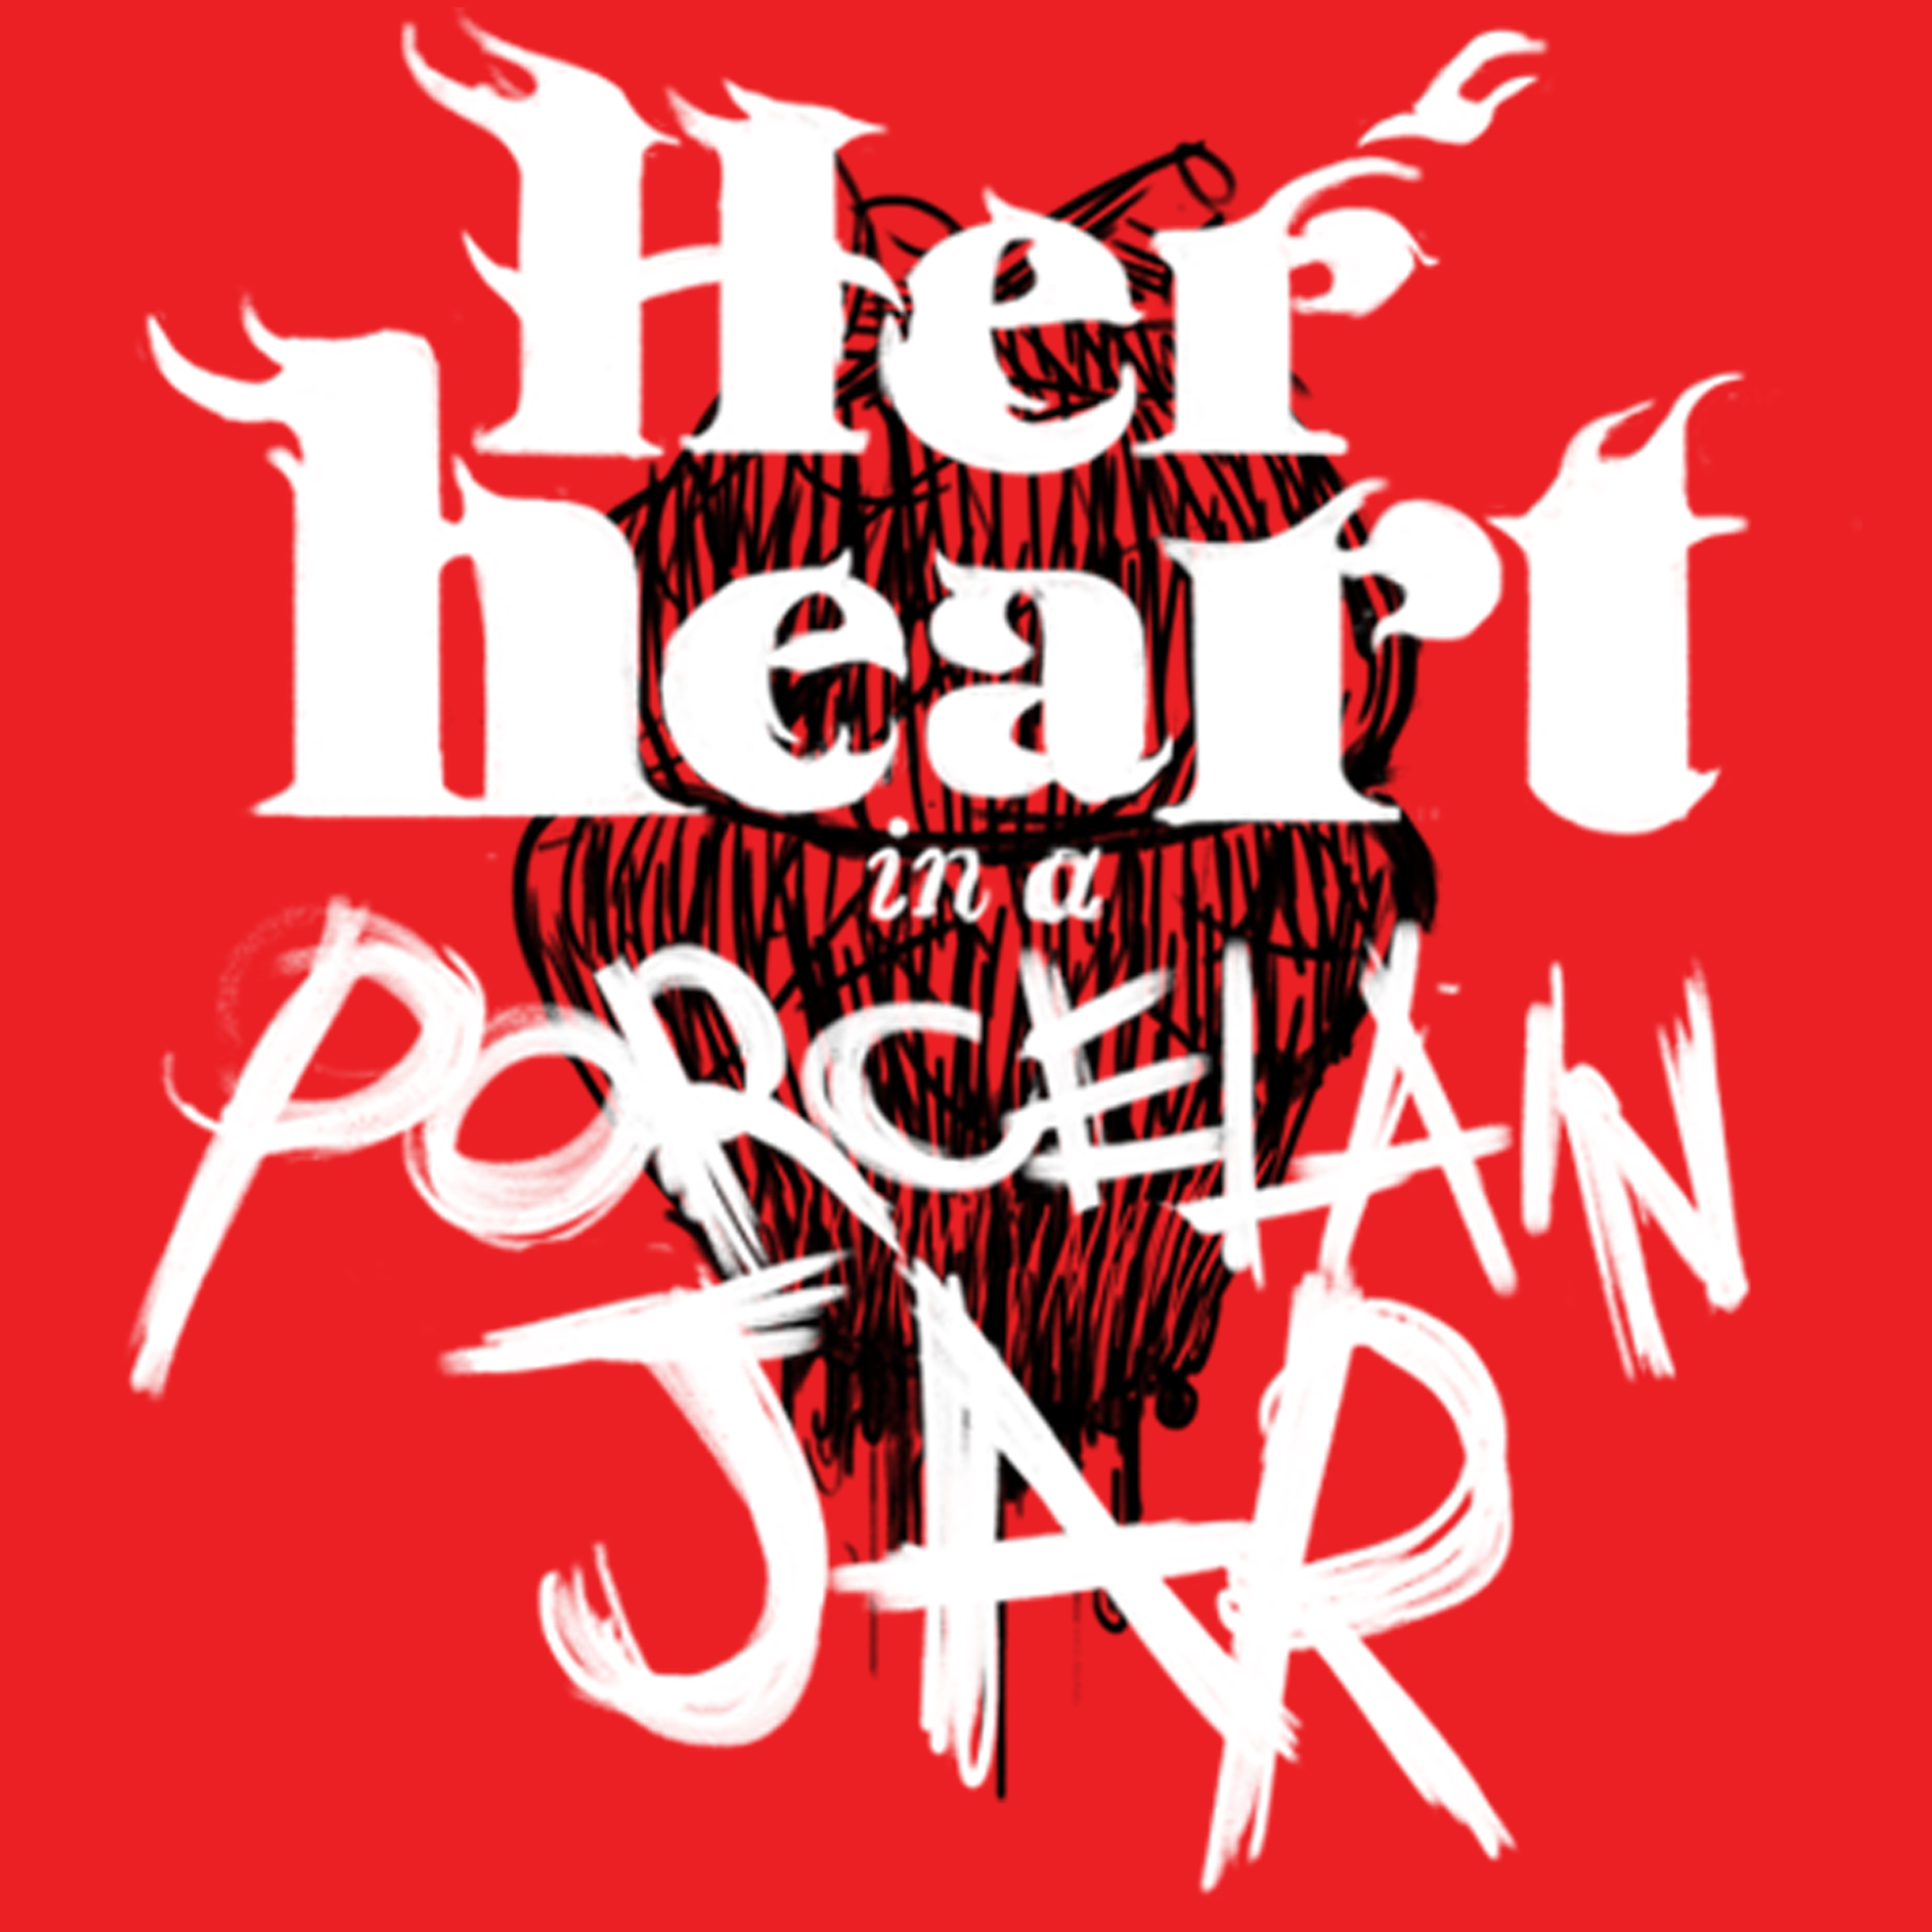 Her Heart